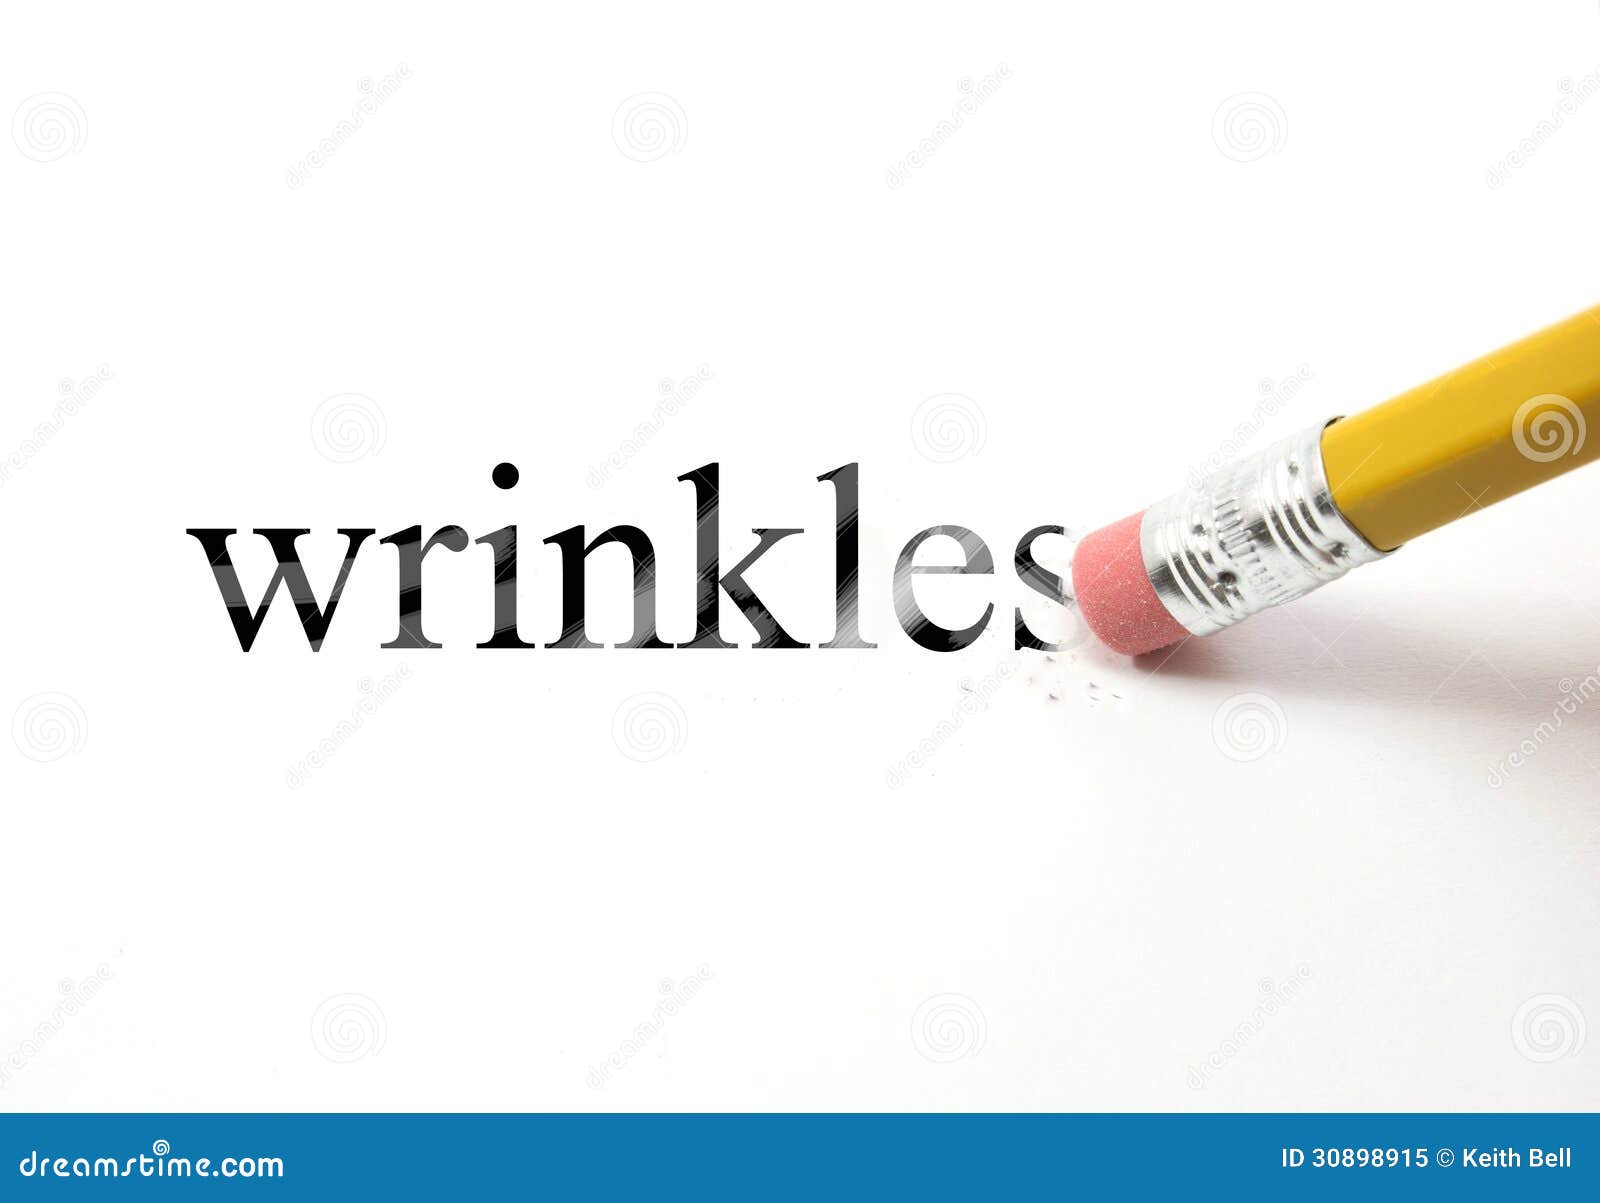 erasing wrinkles